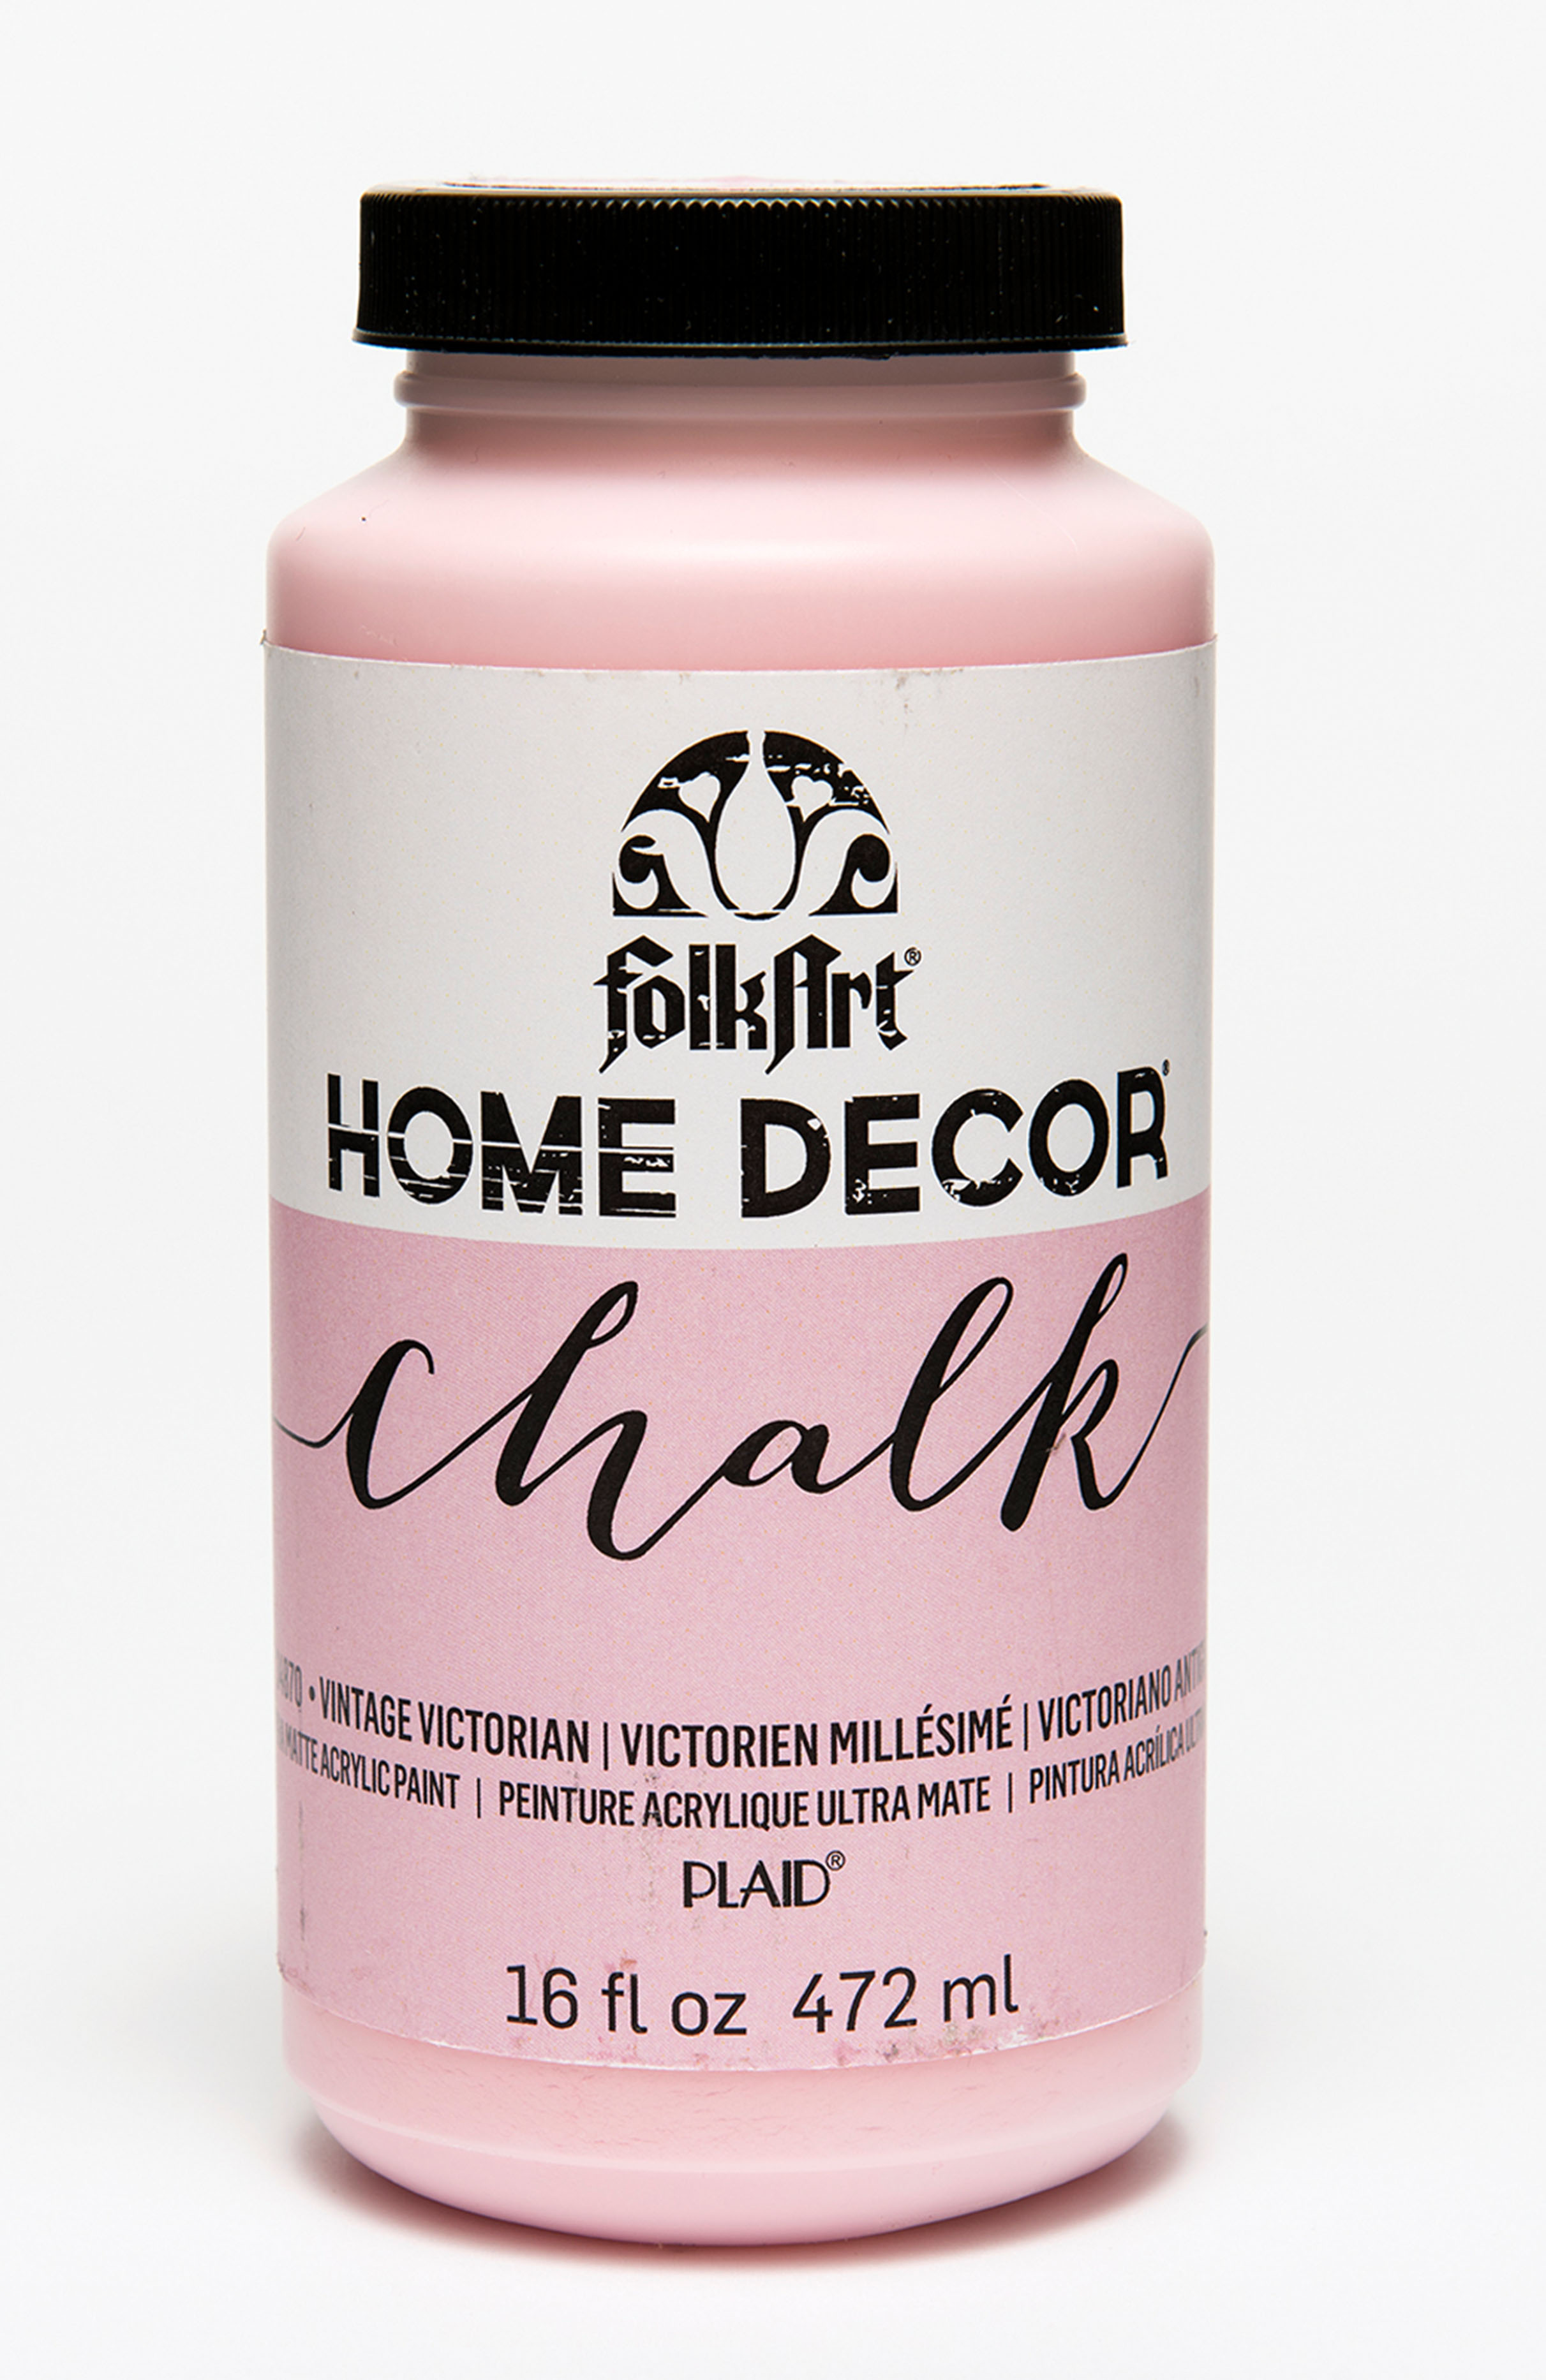 FolkArt • Home Decor chalk Vintage victorian 472ml